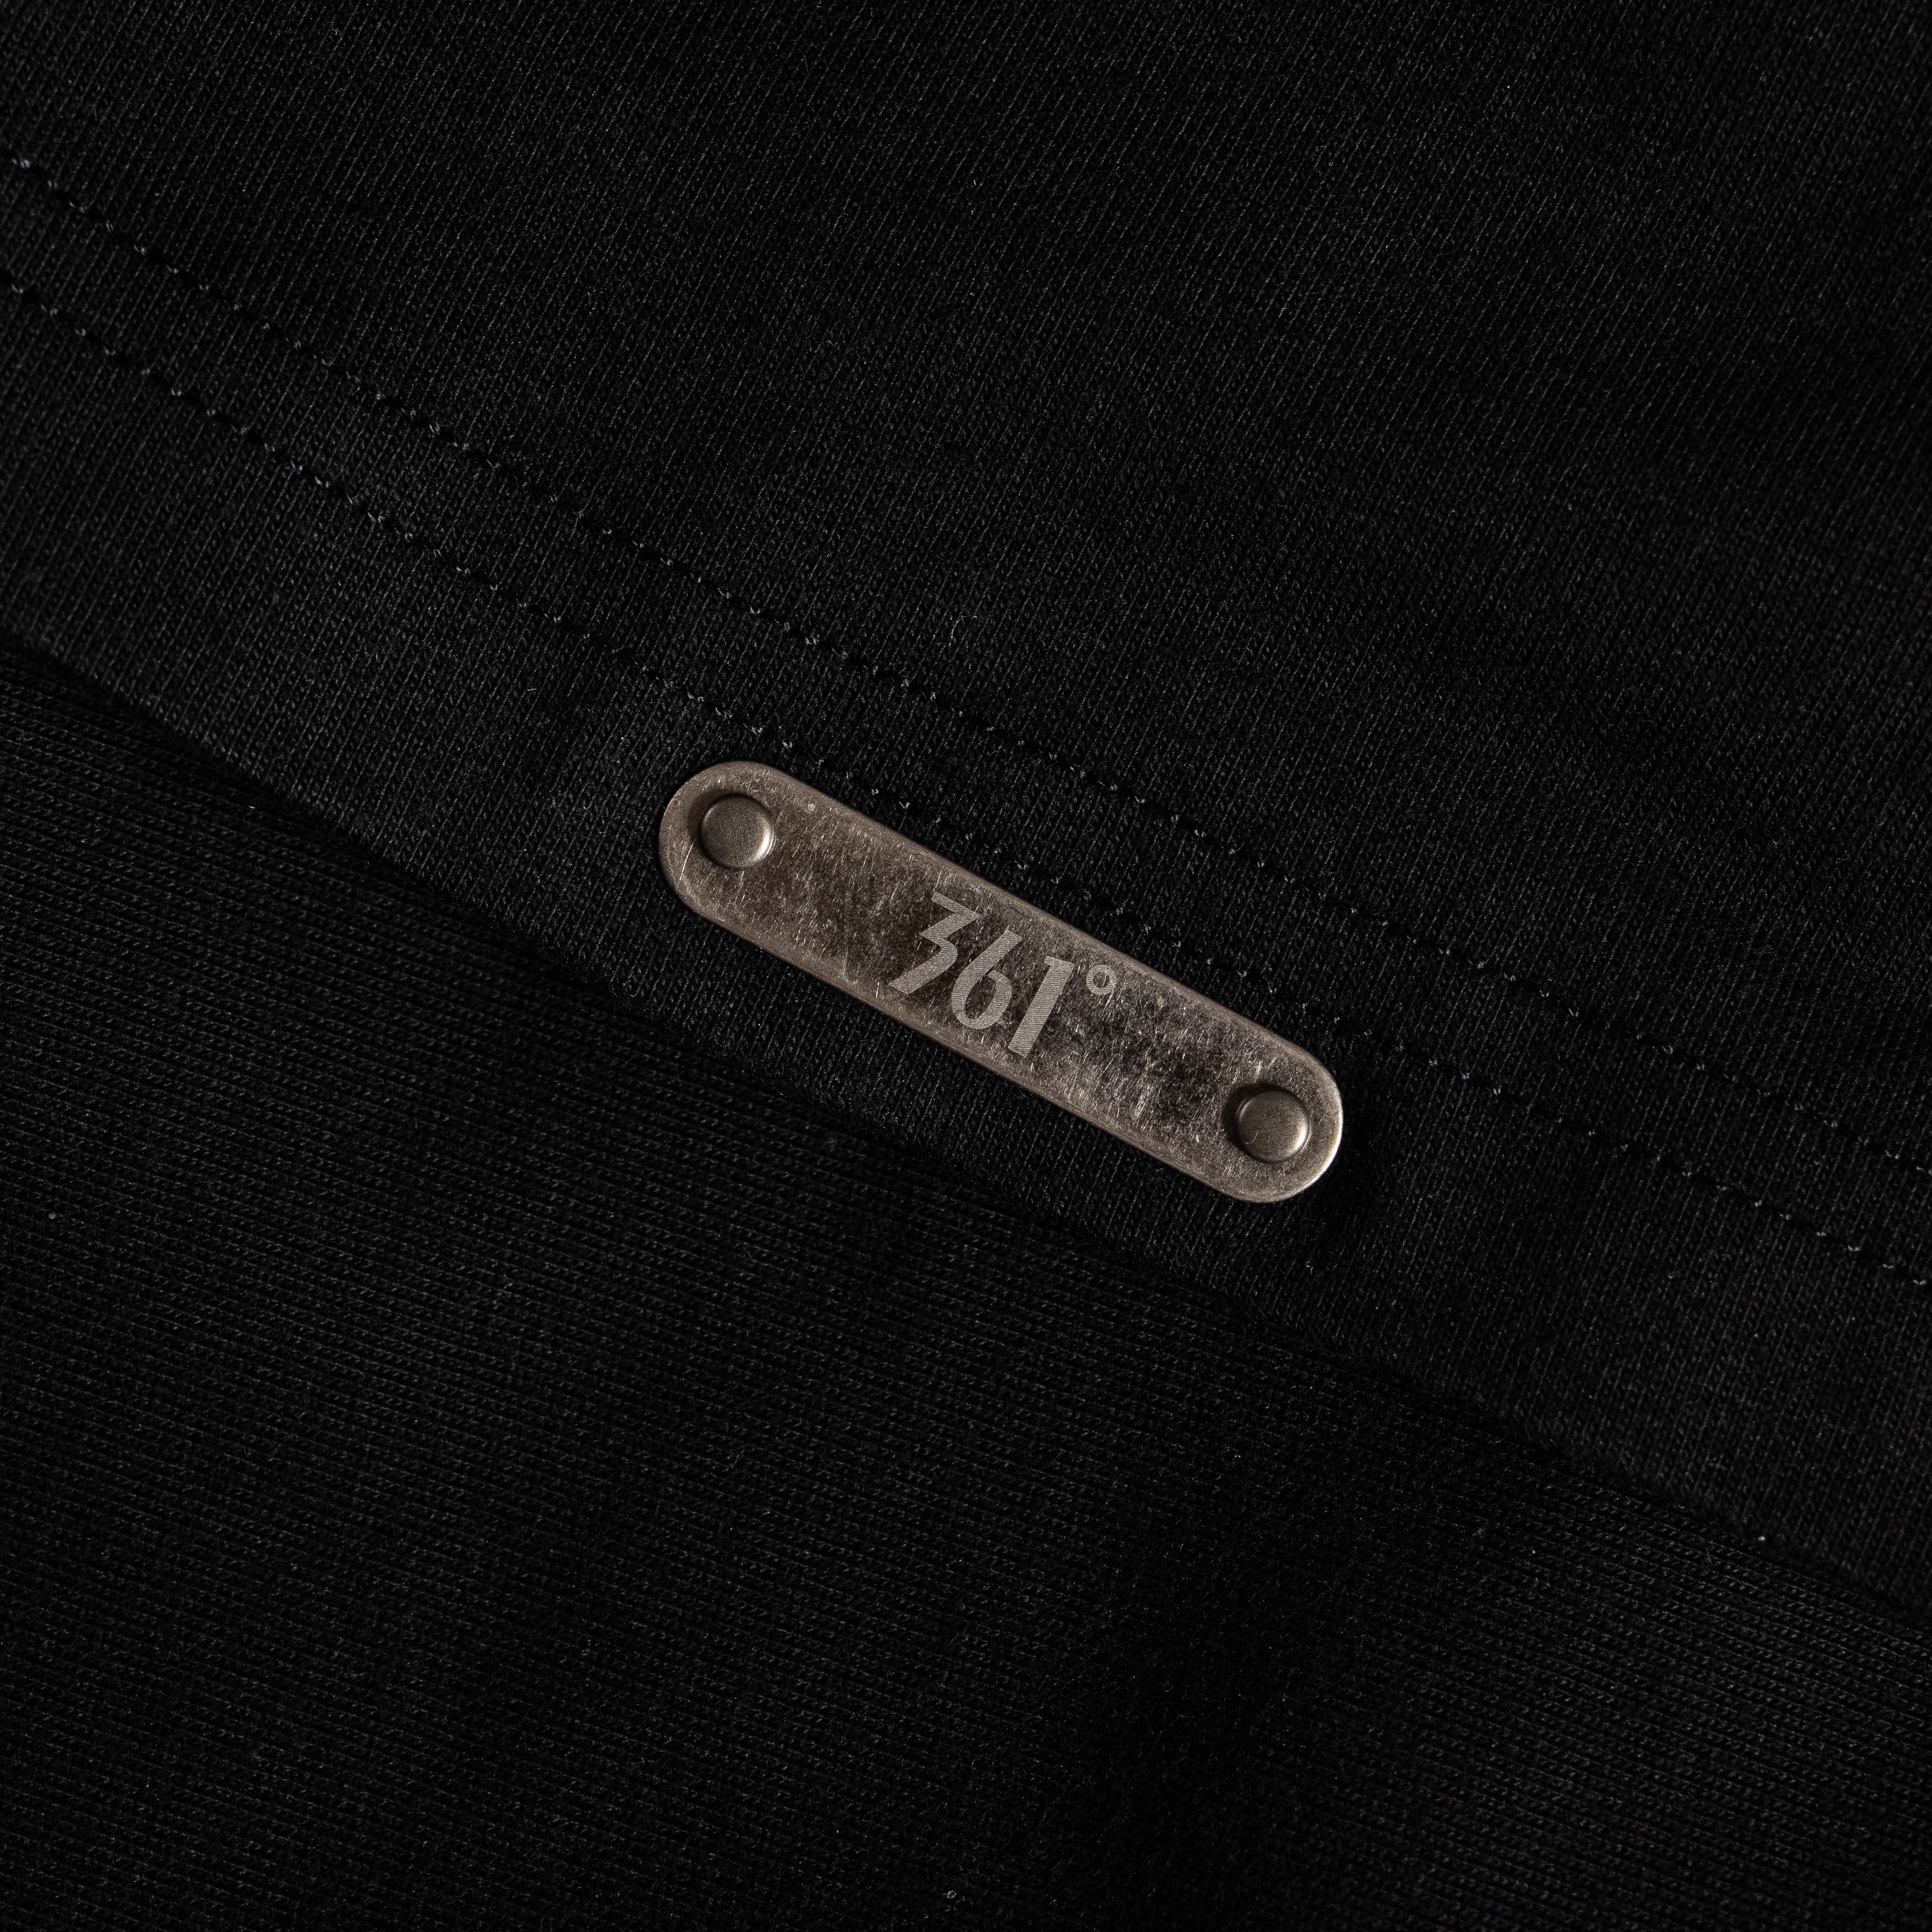 JET X設計字 T-Shirt黑色